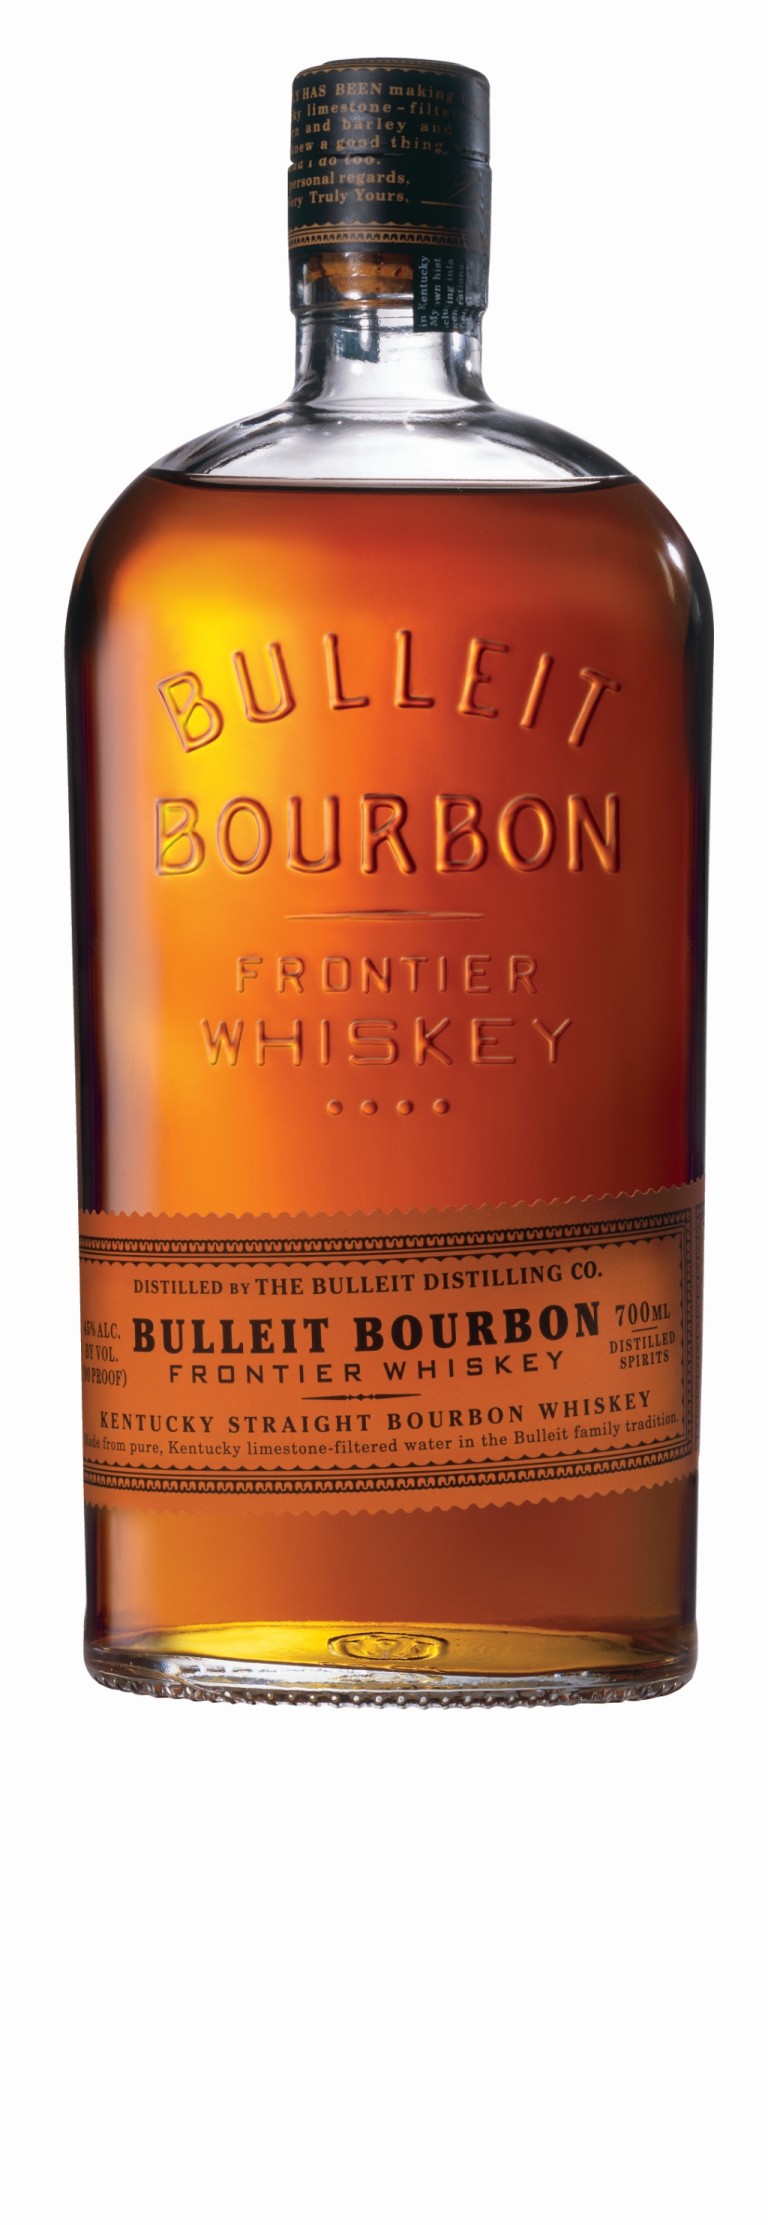 Erinnerung: Handsignierter Bulleit Bourbon zu gewinnen